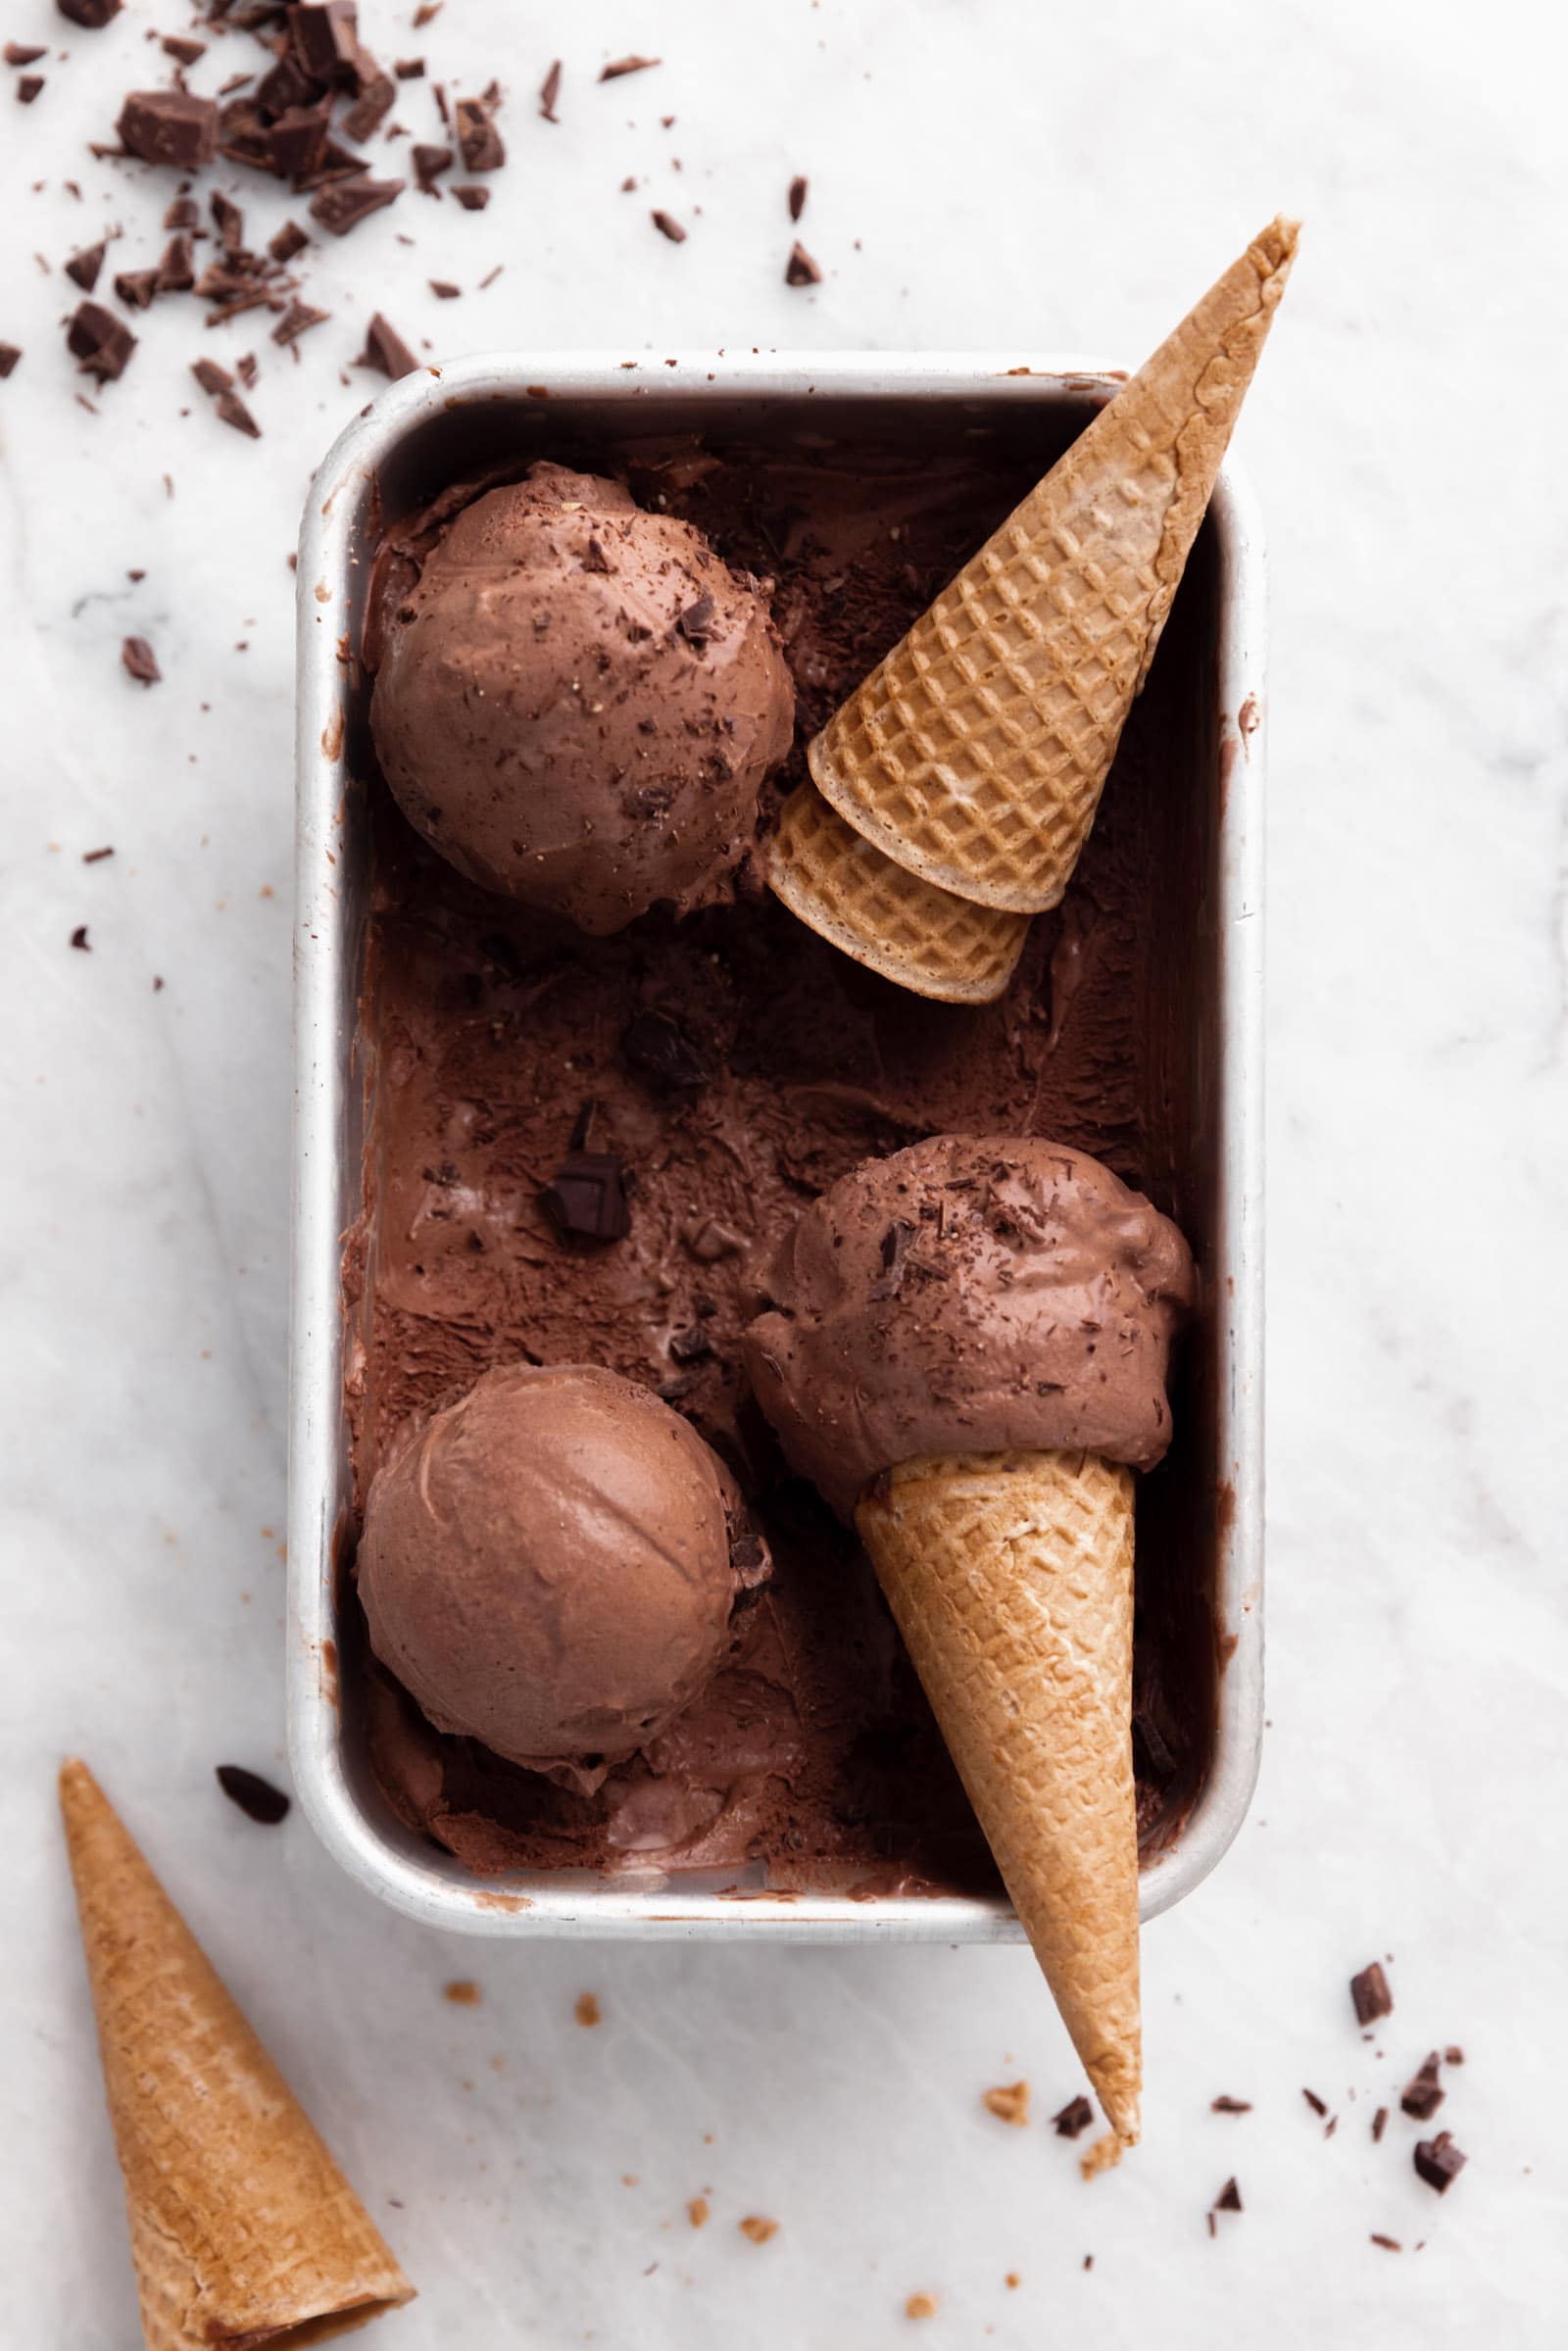 Homemade Ice Cream: So Creamy, Dreamy & Easy! - Shelf Cooking